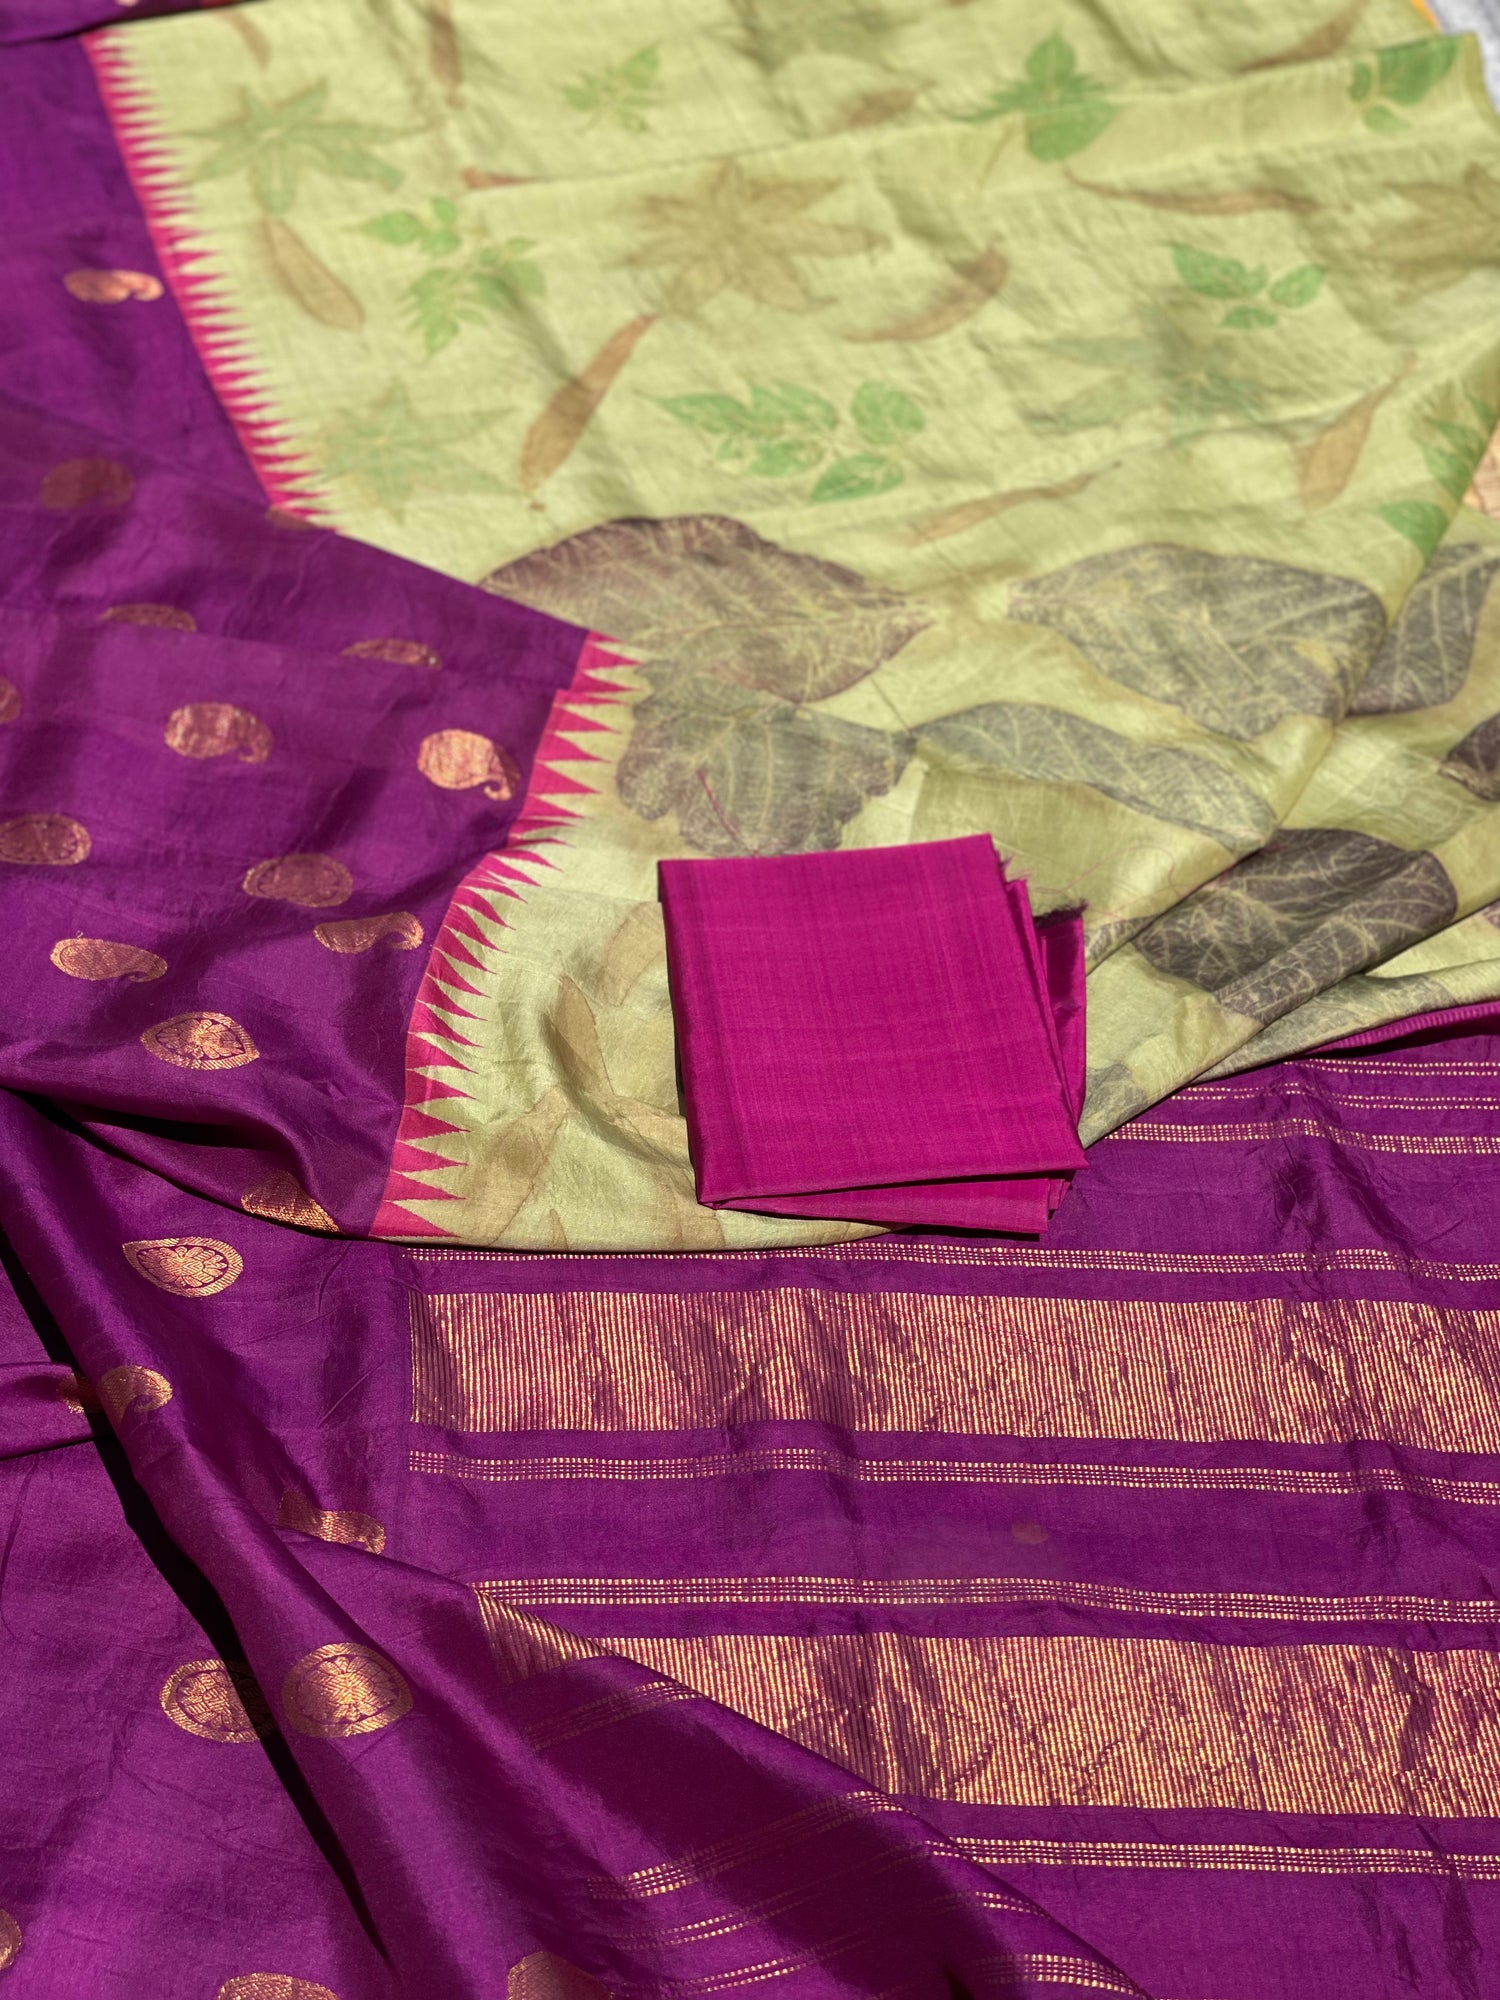 Tharagai Fusion Ecoprints on Kanchivaram silk saree